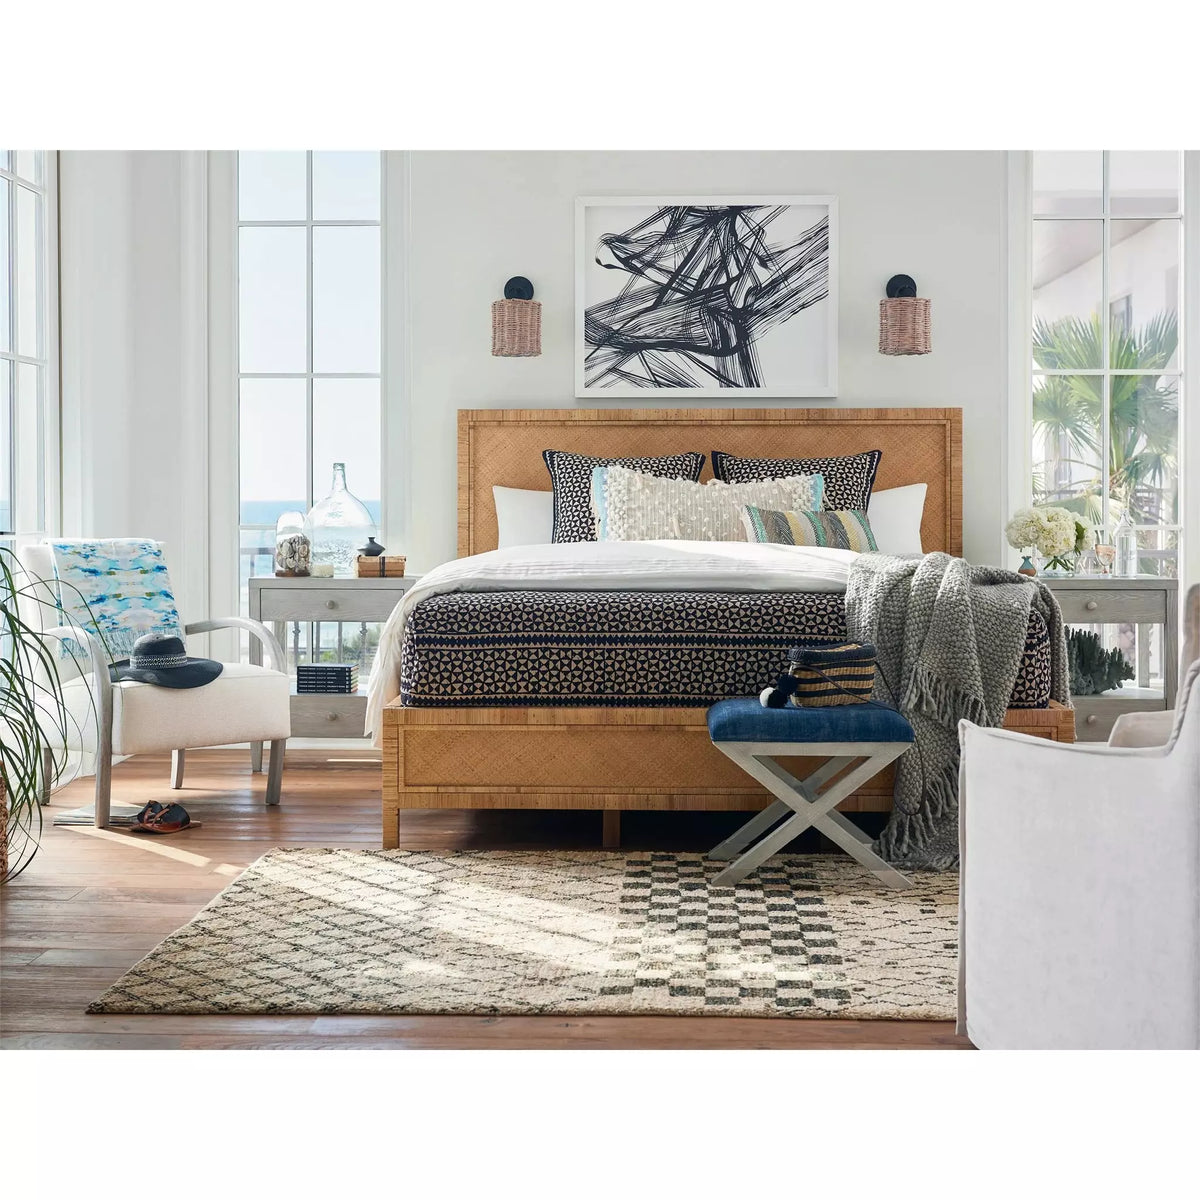 Bedside Table - Be Bold Furniture